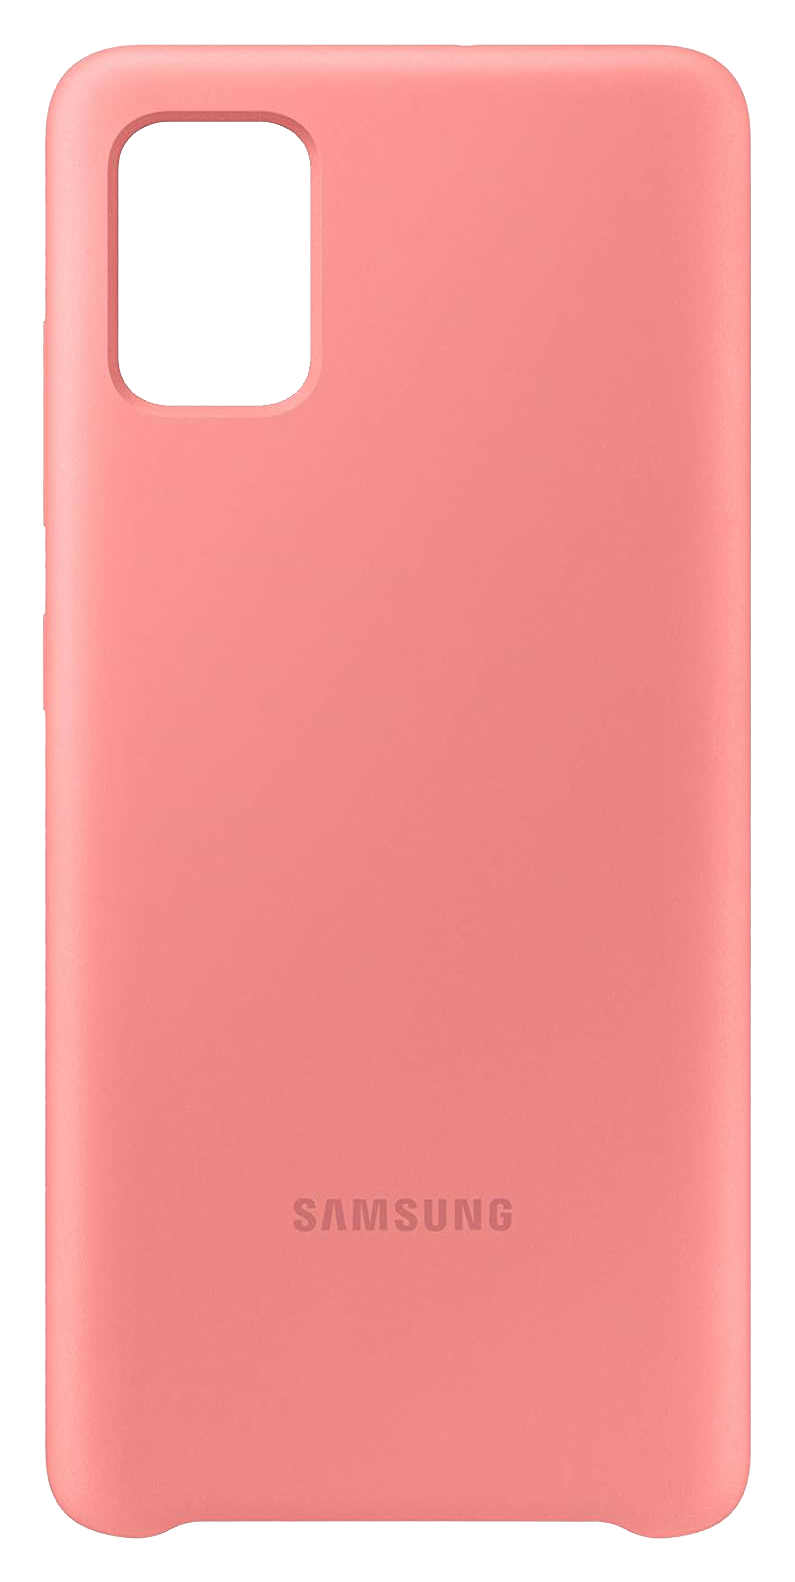 Samsung Silicone Cover (Galaxy A51) pink - Ohne Vertrag